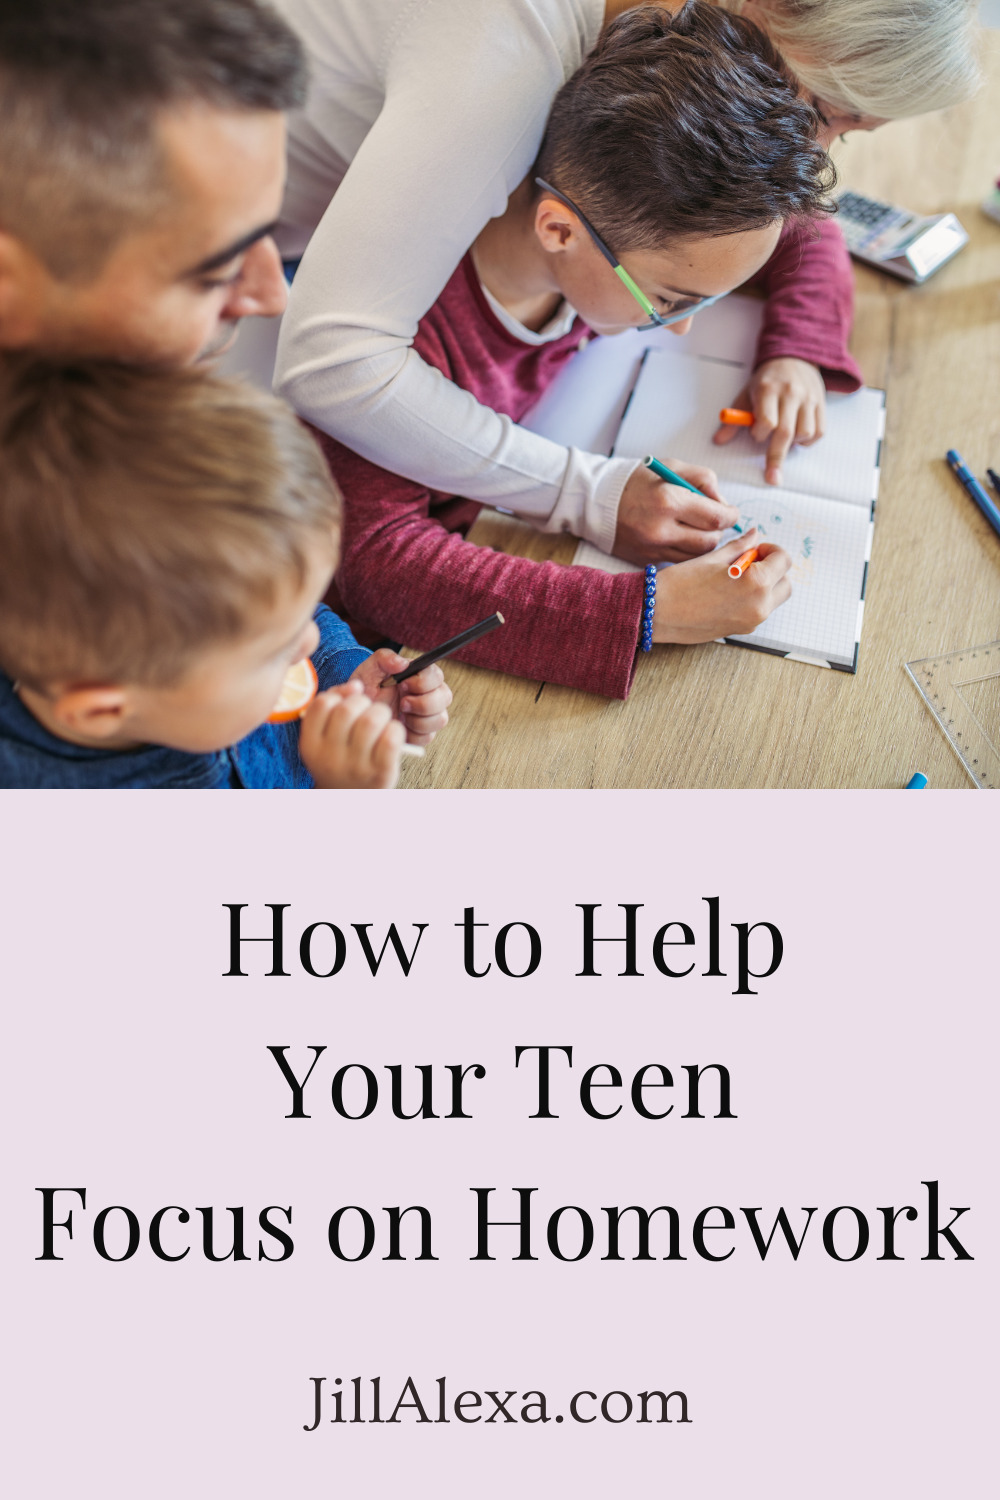 How to Help Your Teen Focus on Homework